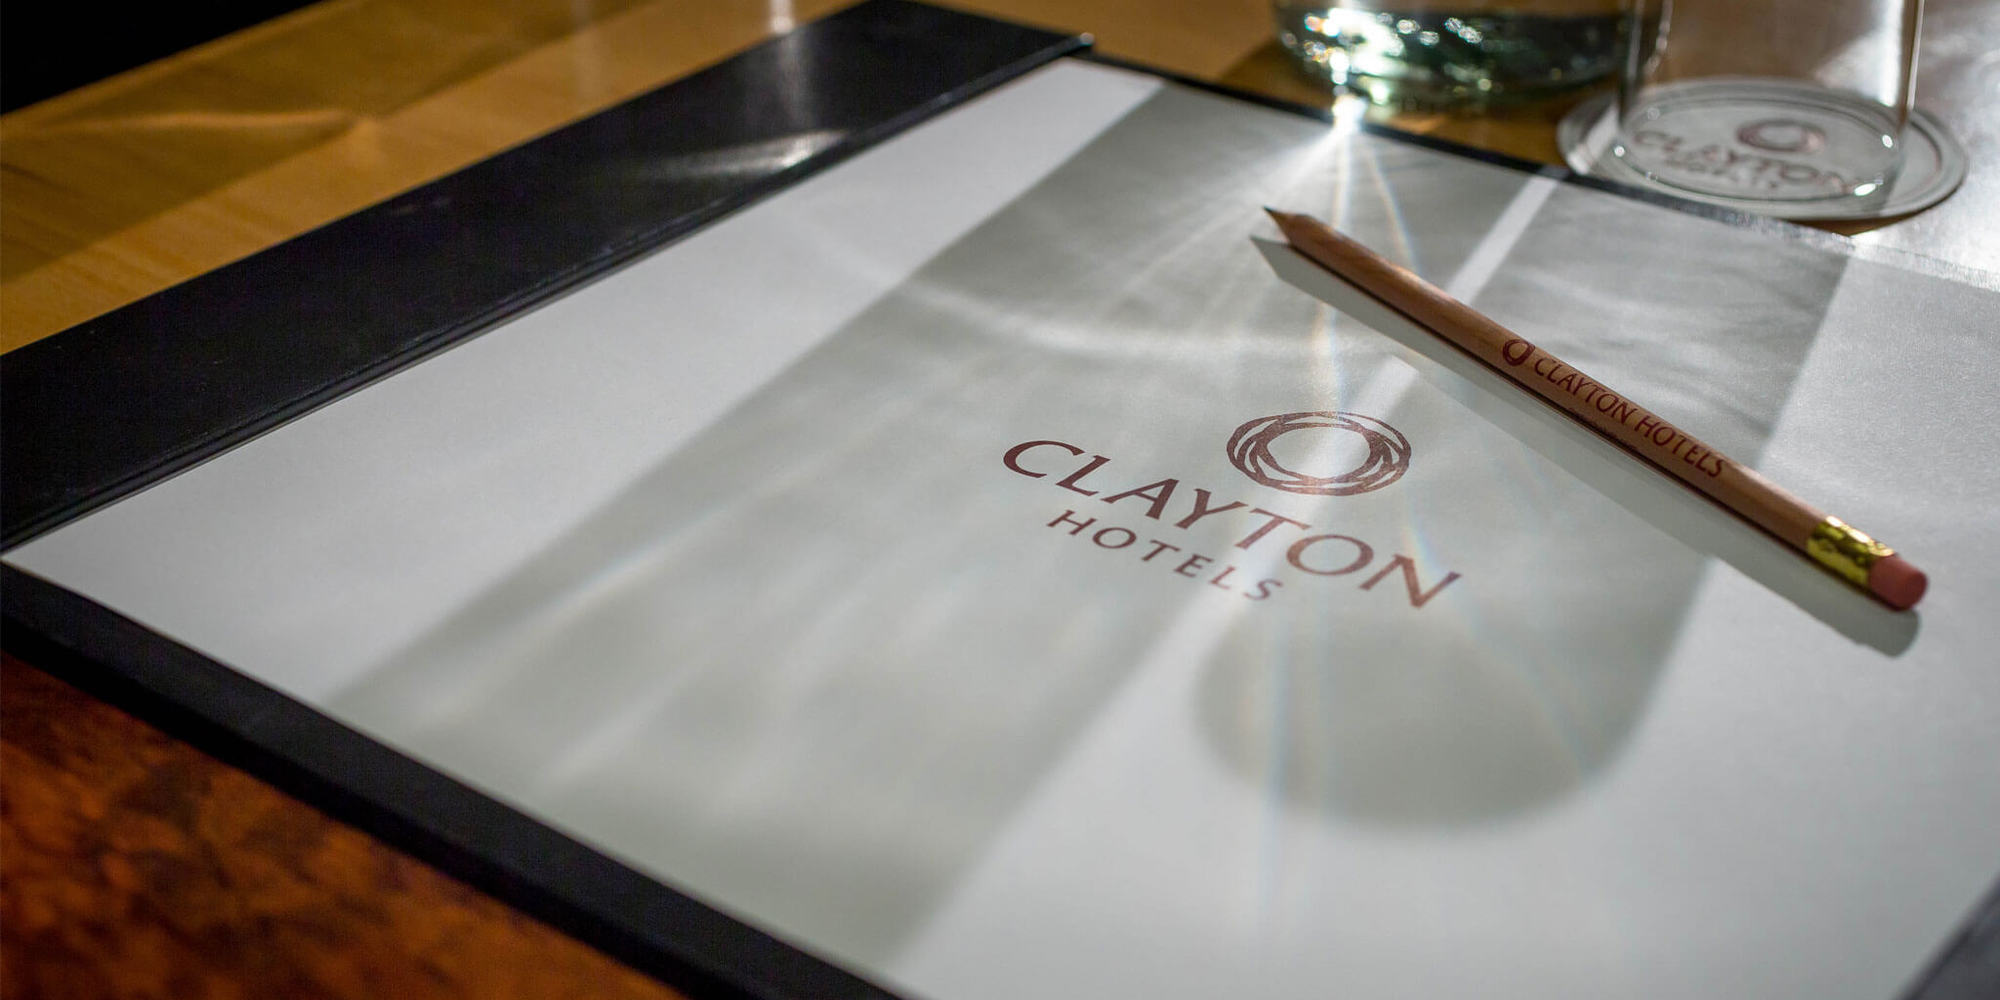 Clayton Hotel Cardiff Business bilde